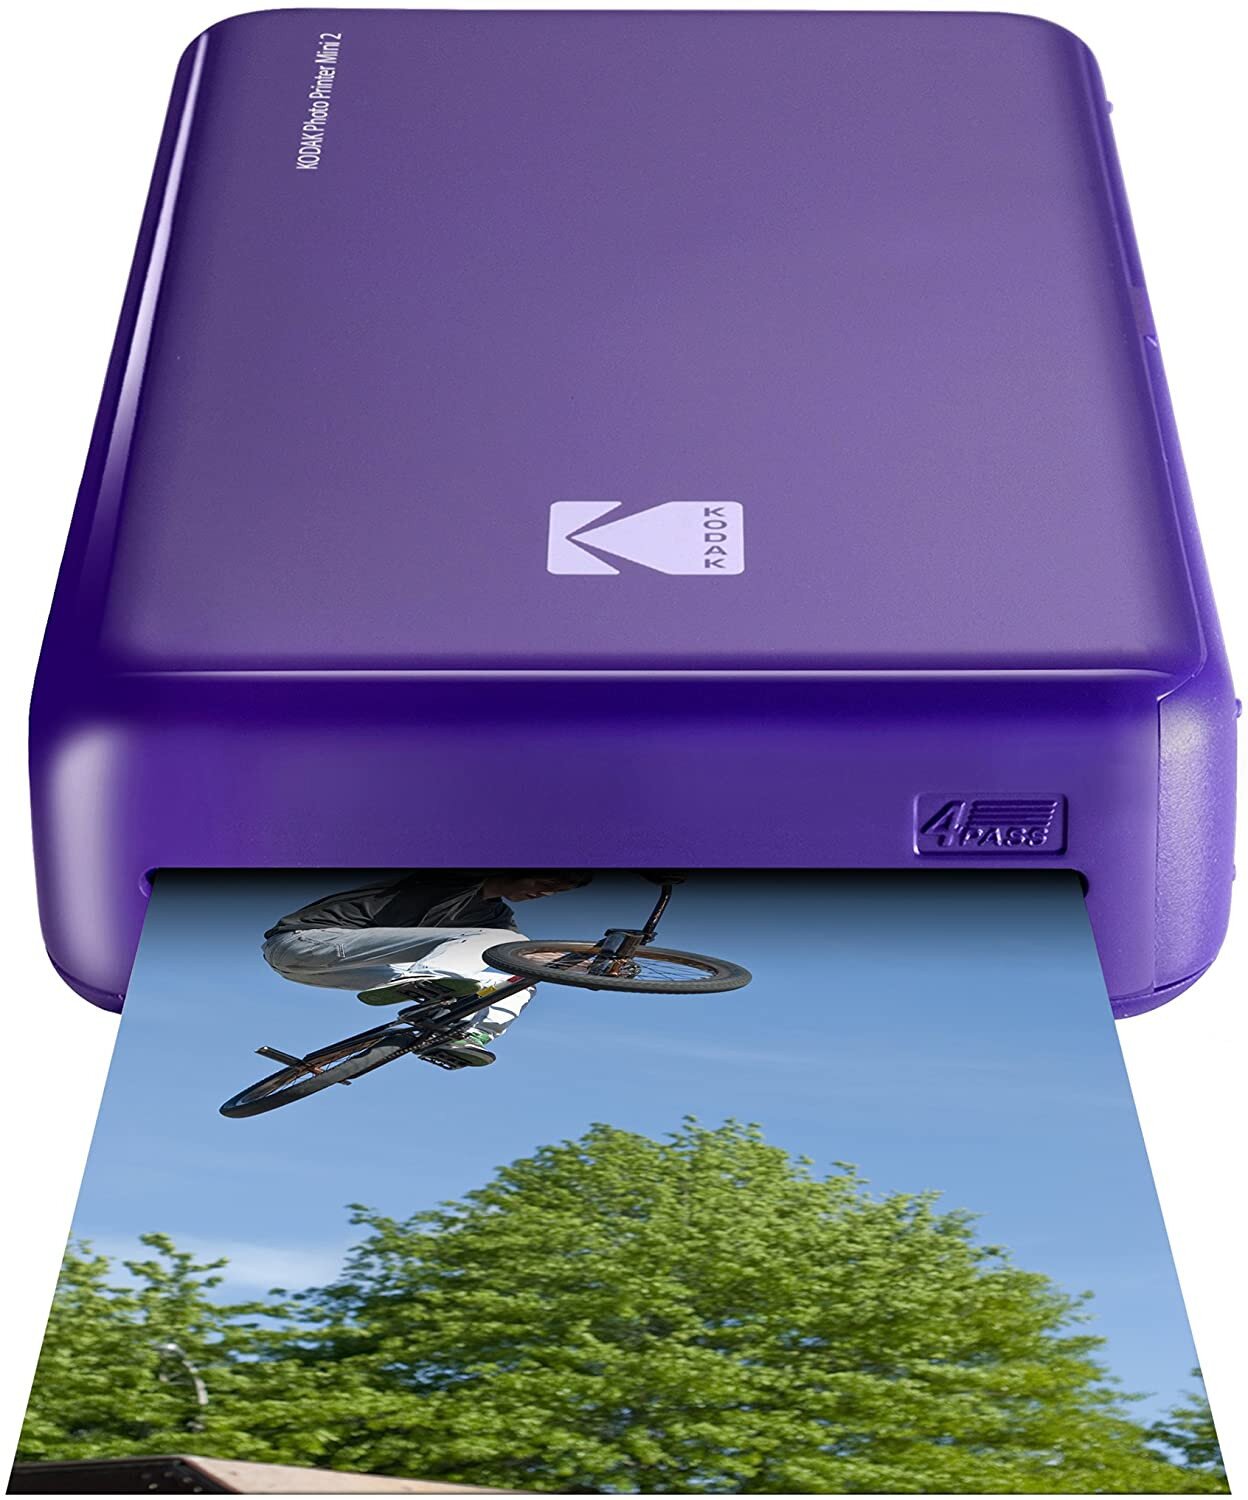 Buy Kodak Mini 2 Retro Portable Instant Photo Printer (P210R) - Printer +  68 Sheets - Black online in Pakistan 